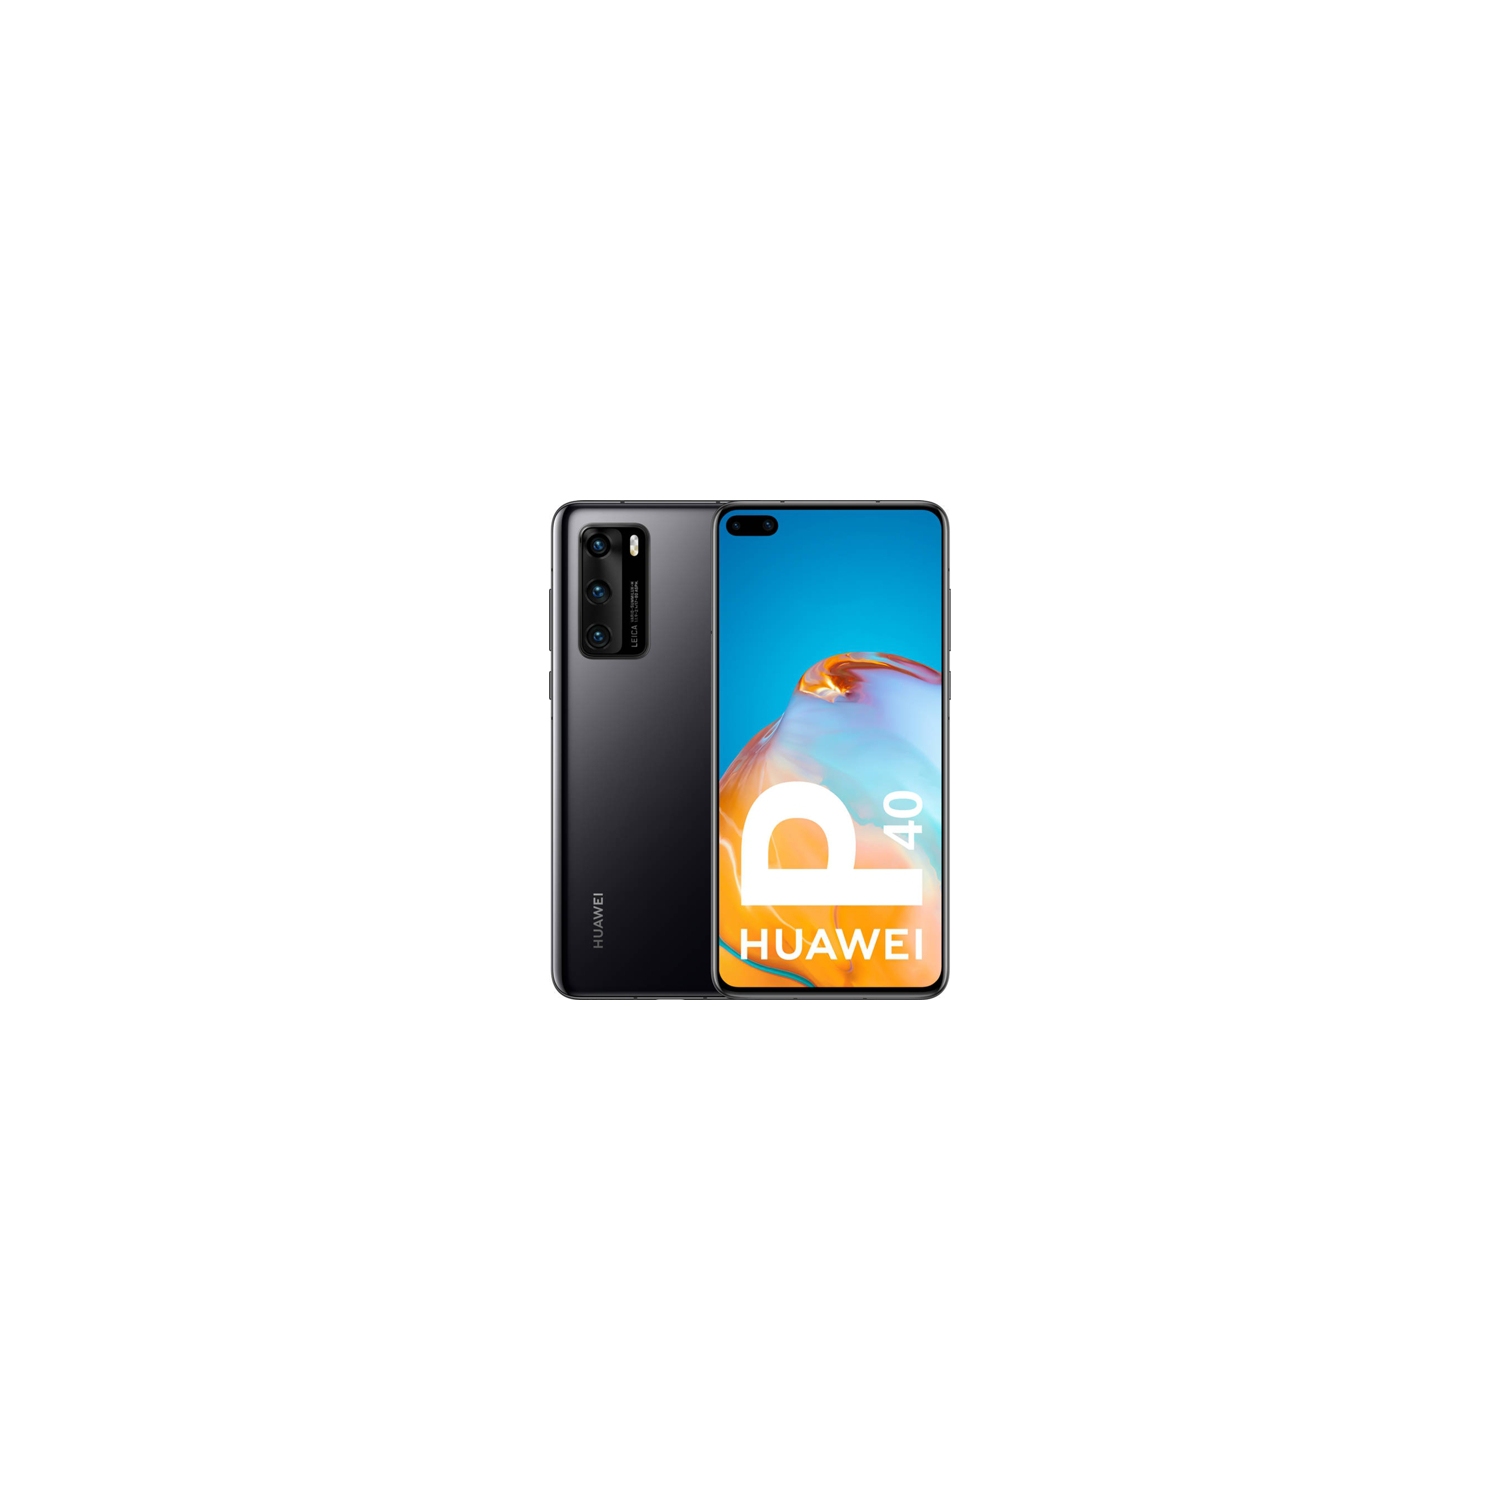 Refurbished (Good) - Huawei P40 128GB Smartphone - Black - Unlocked